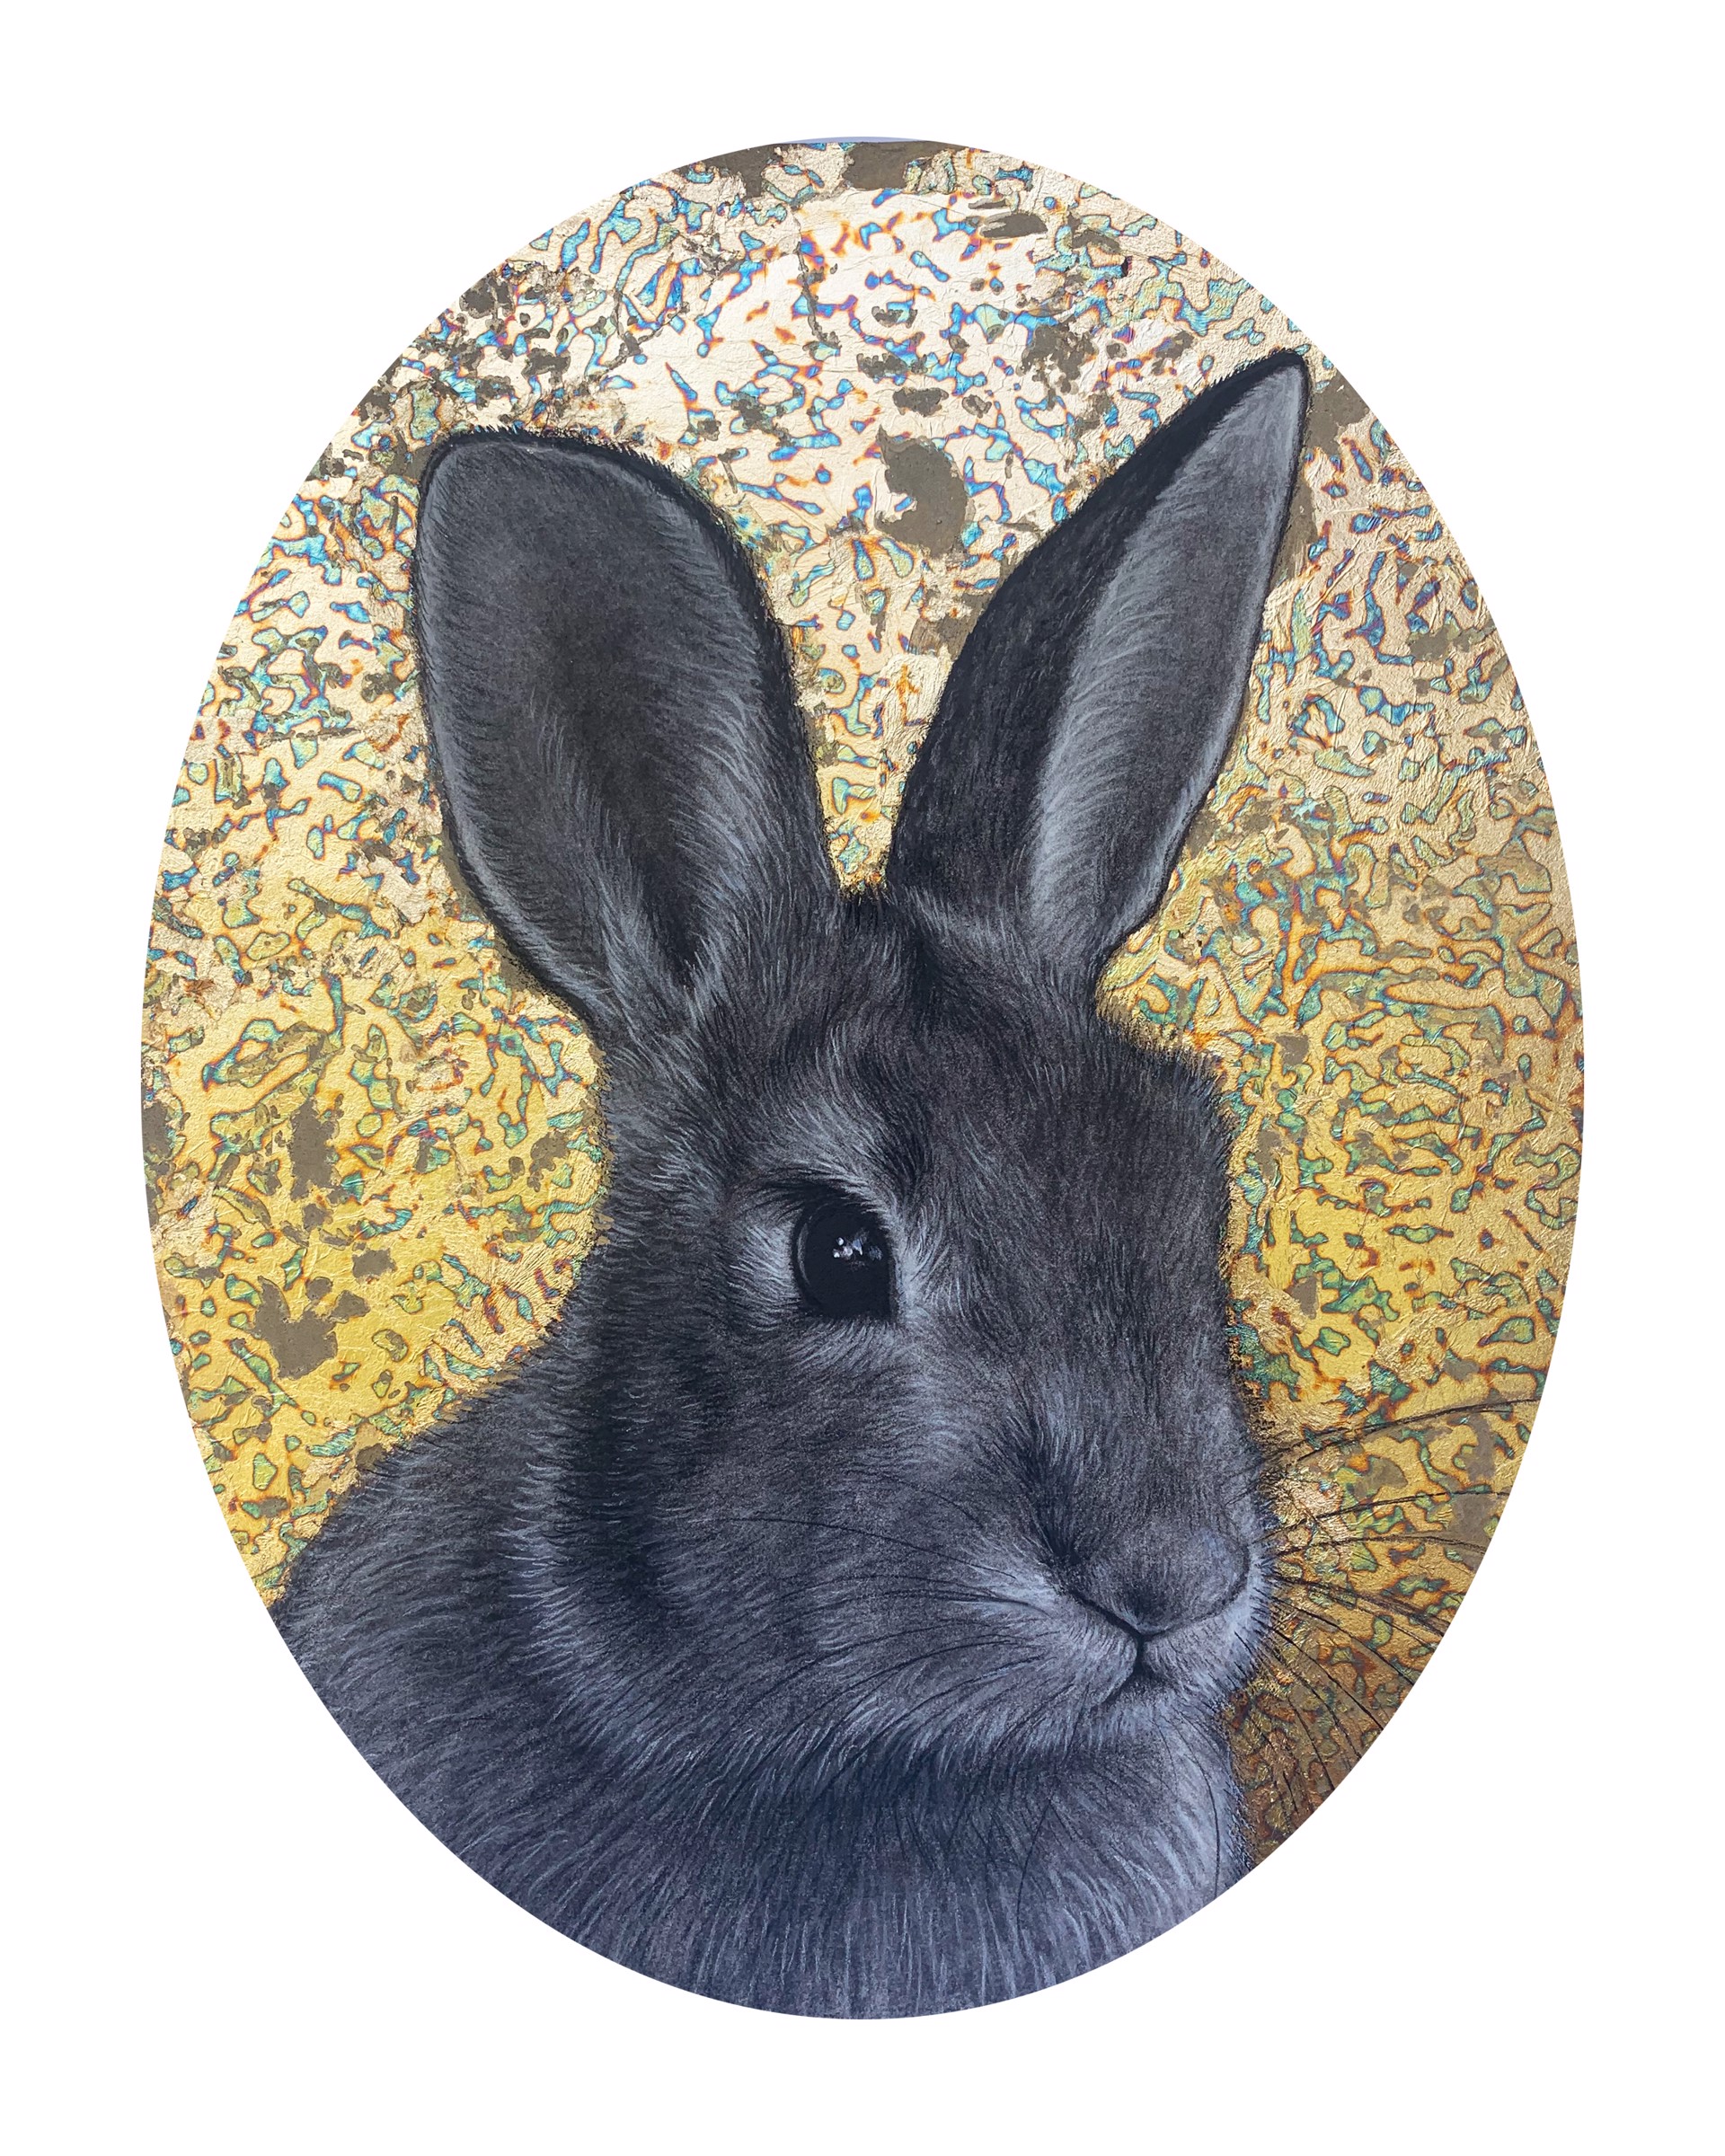 Polaris No. 12 (Year of the Rabbit) by Traci Wright Martin